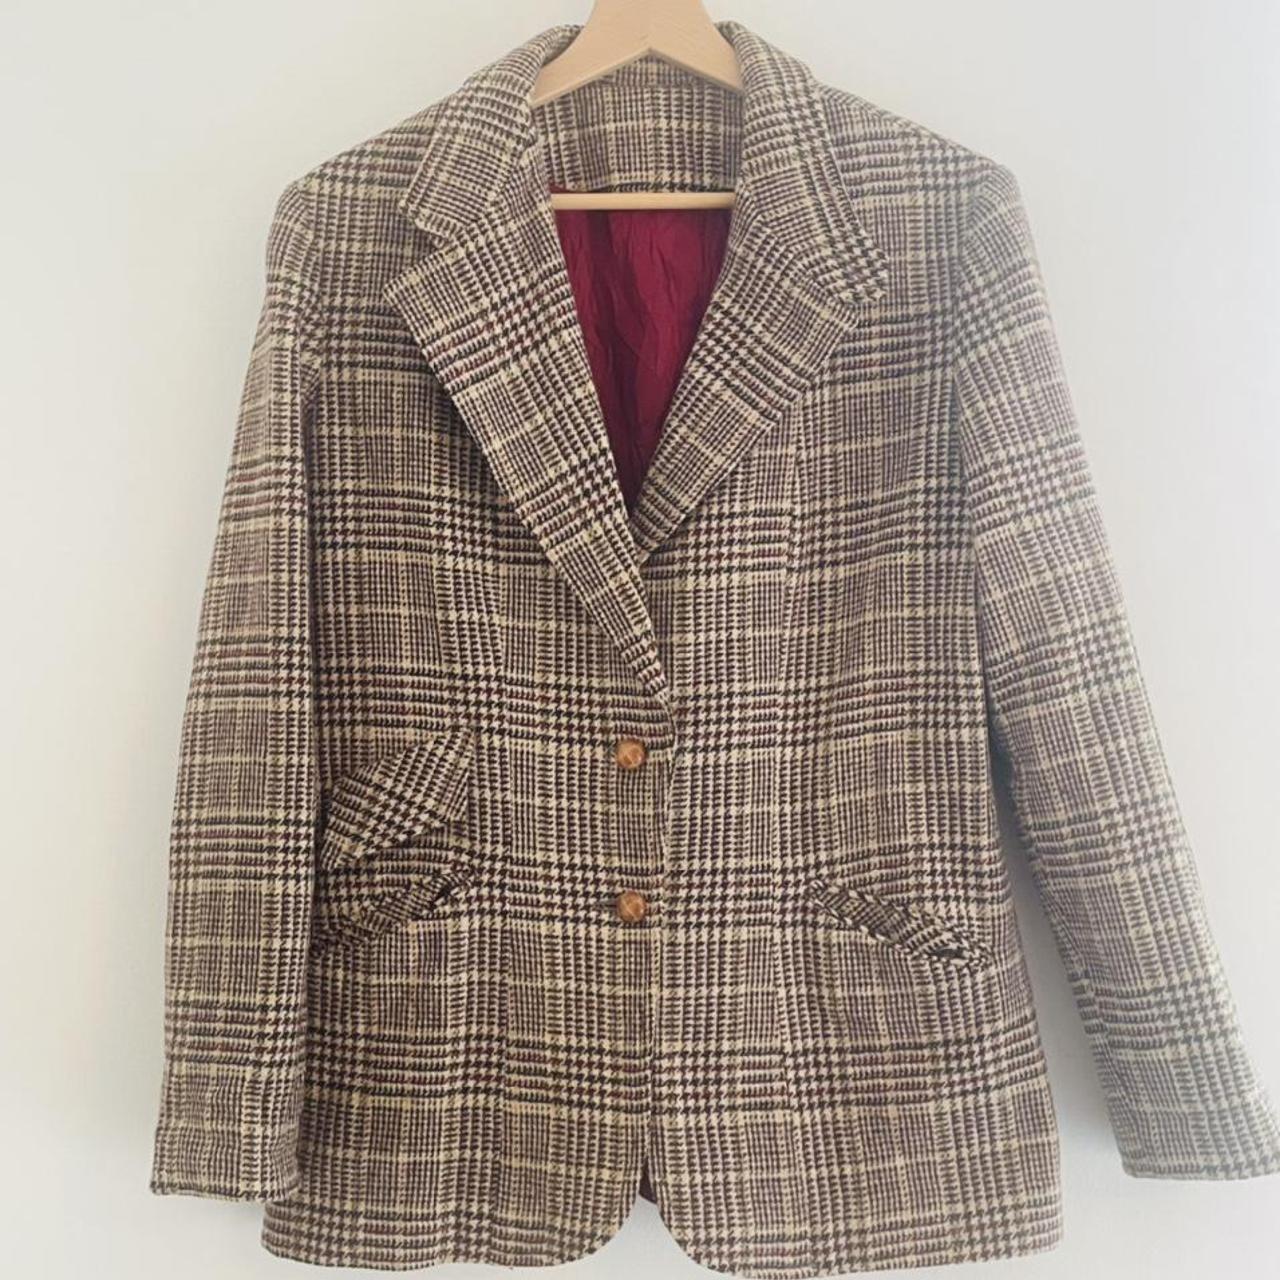 VINTAGE tweed jacket with beautiful woven leather... - Depop